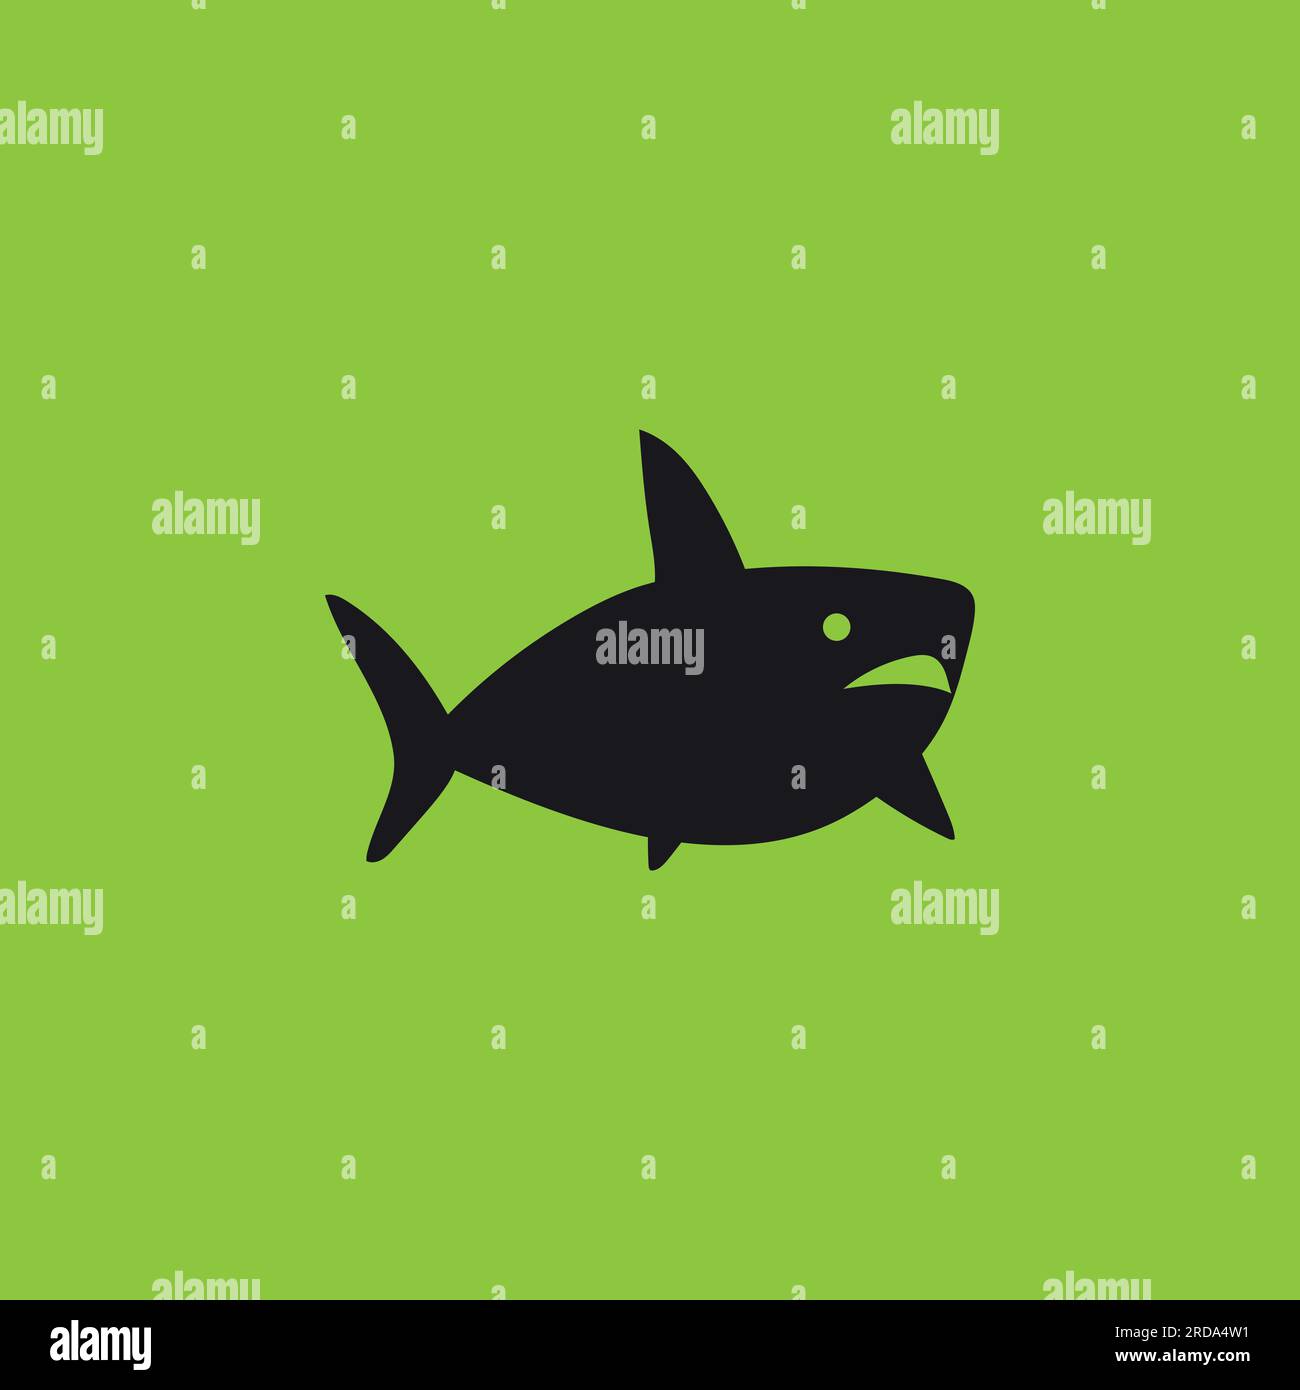 Great White Shark, Silhouette - Vector Stock Vector Image & Art - Alamy